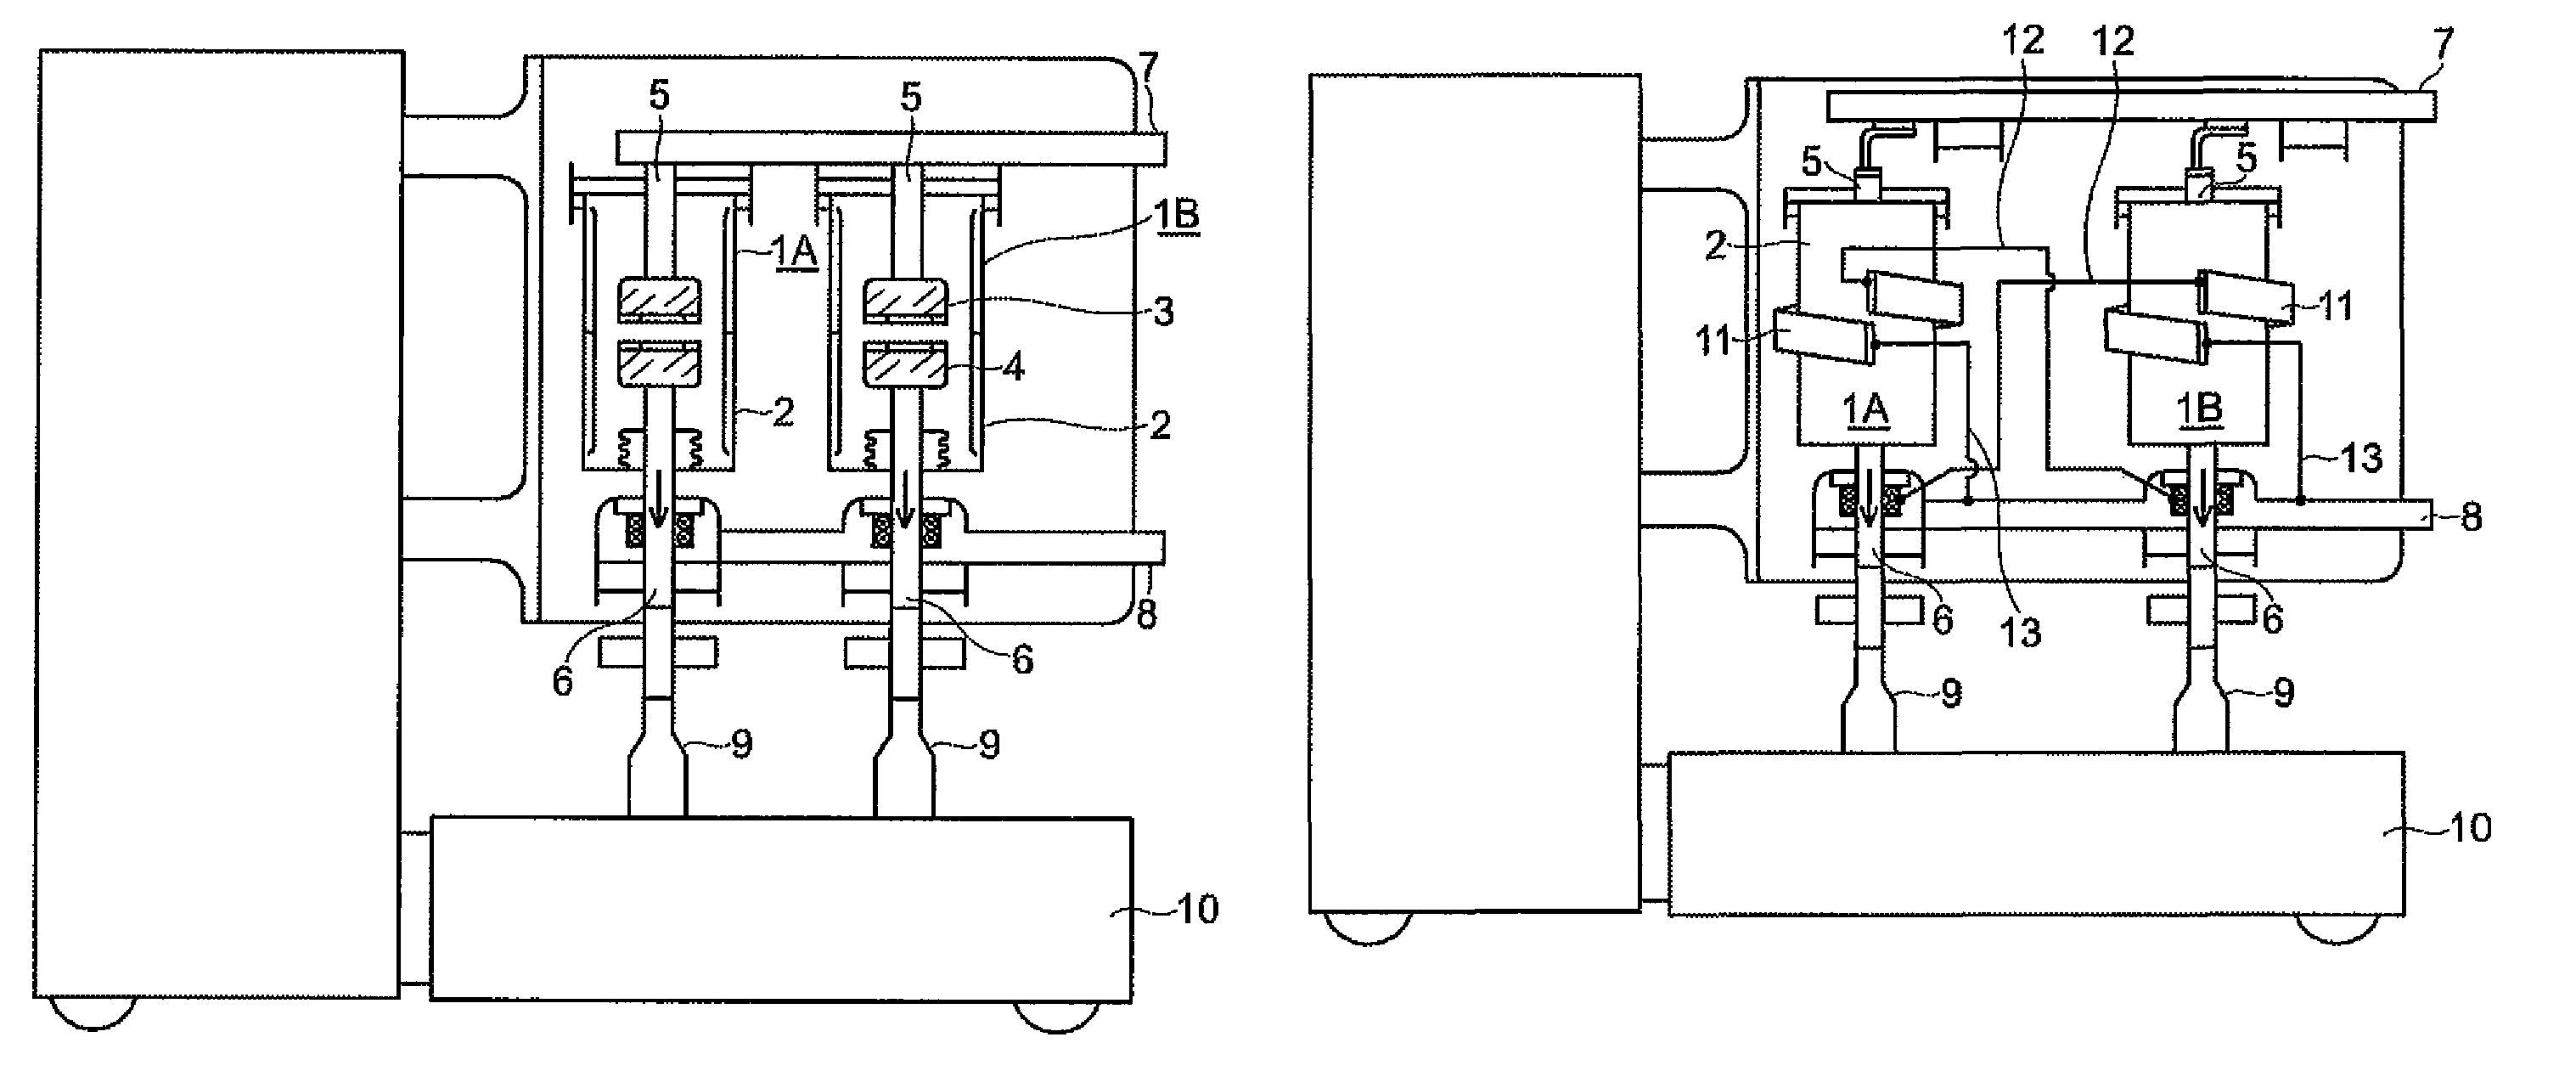 Large-capacity vacuum circuit breaker